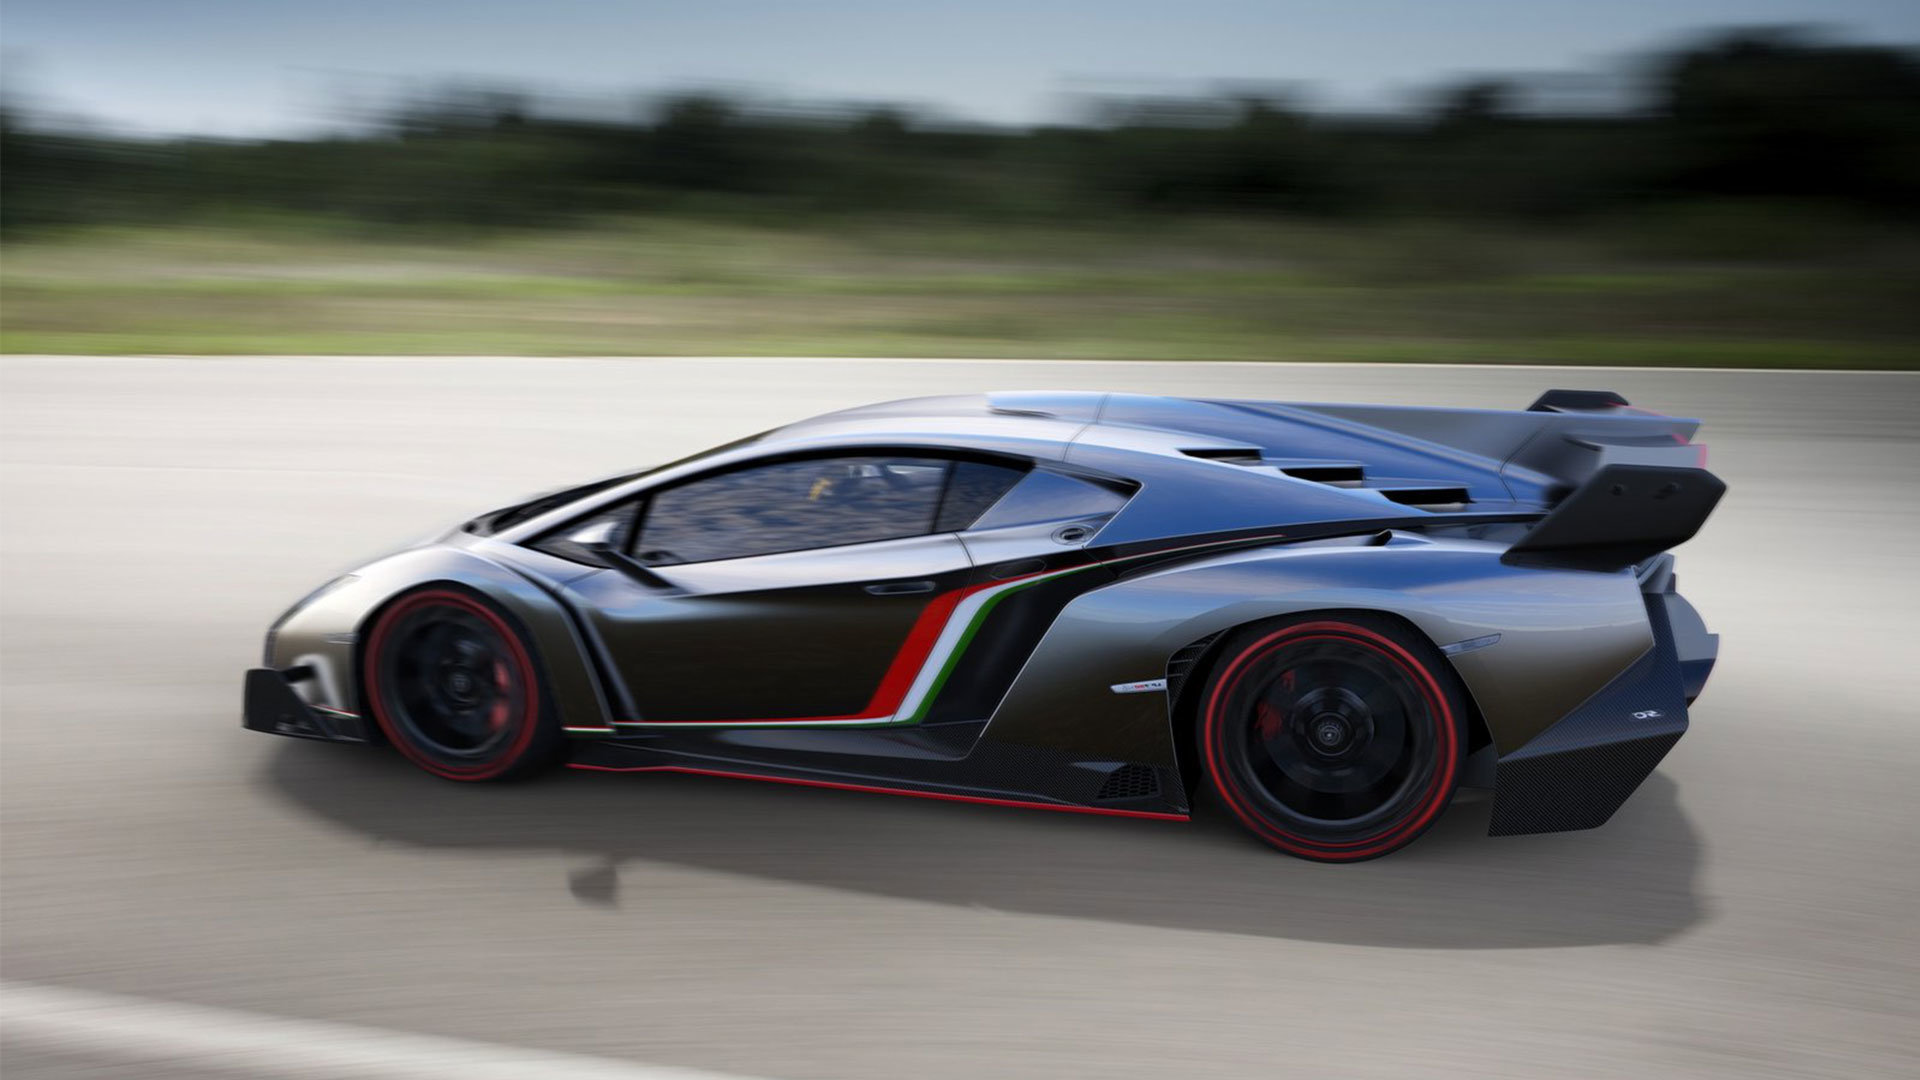 Best Lamborghini Veneno background ID:169388 for High Resolution hd 1920x1080 PC